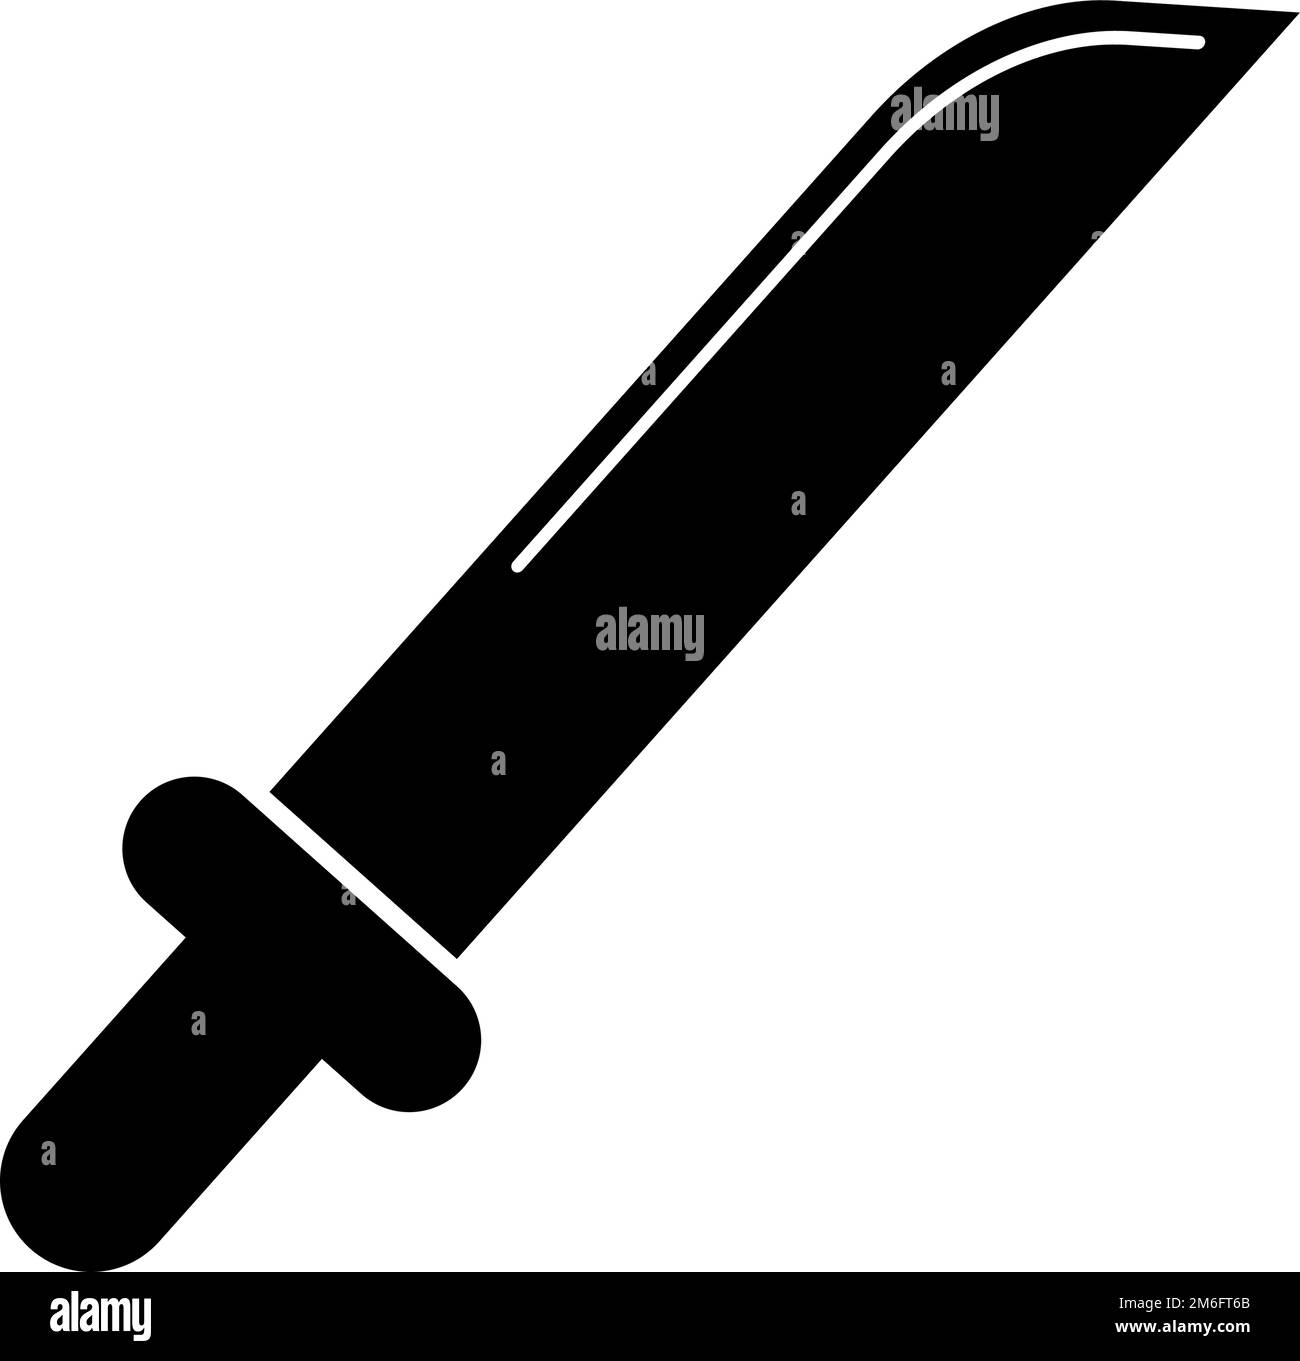 Small knife silhouette icon. Weapon icon. Editable vector. Stock Vector